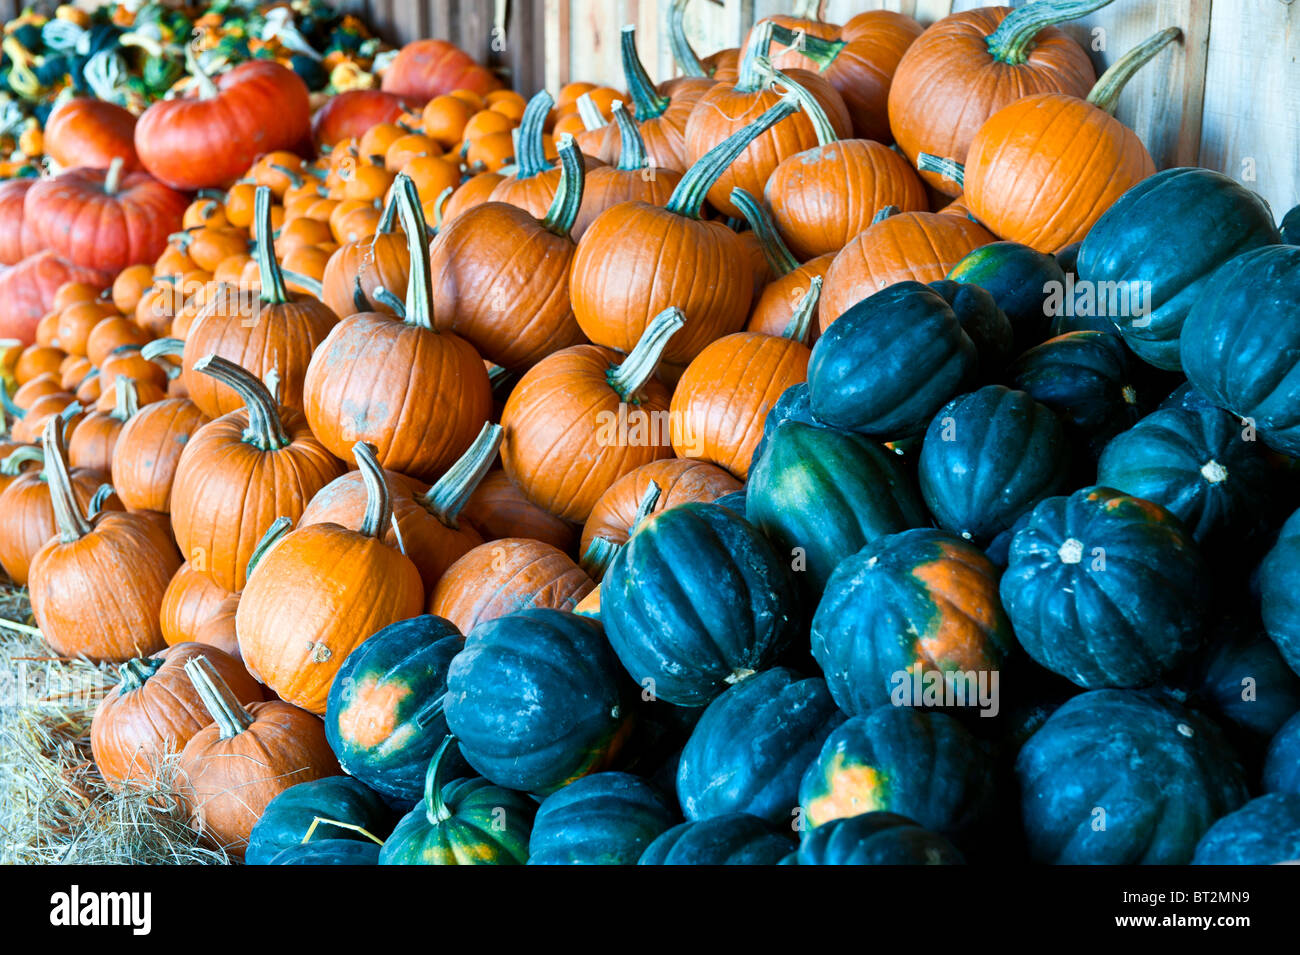 Large display of squash and pumpkins at a farmers' market Stock Photo